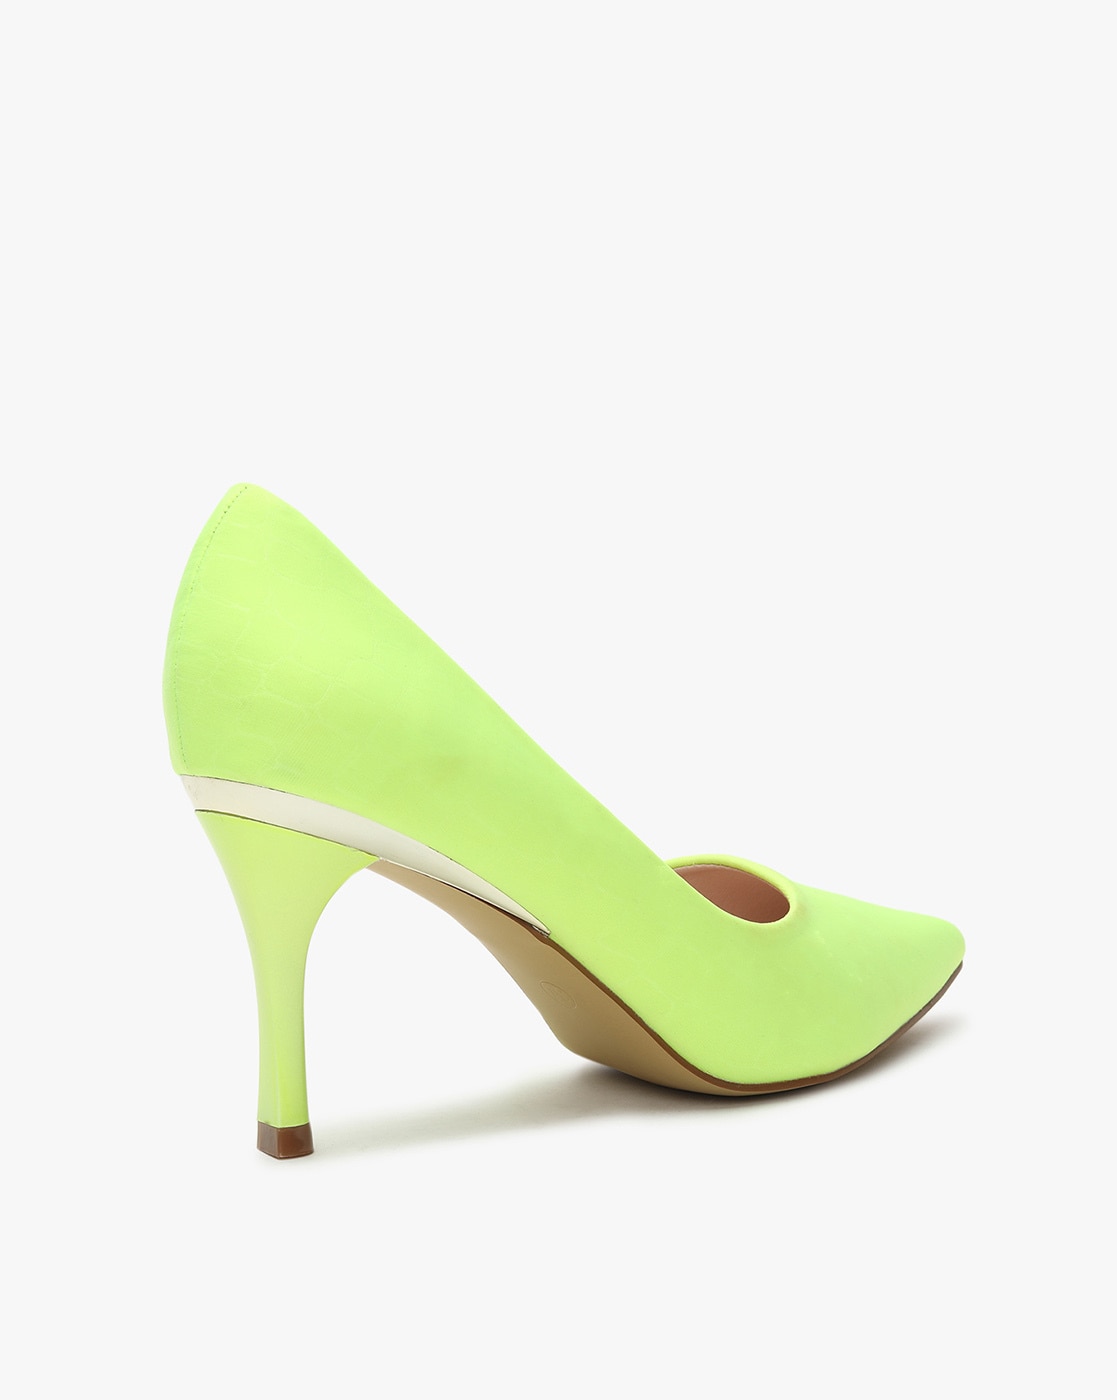 lime green stiletto heels